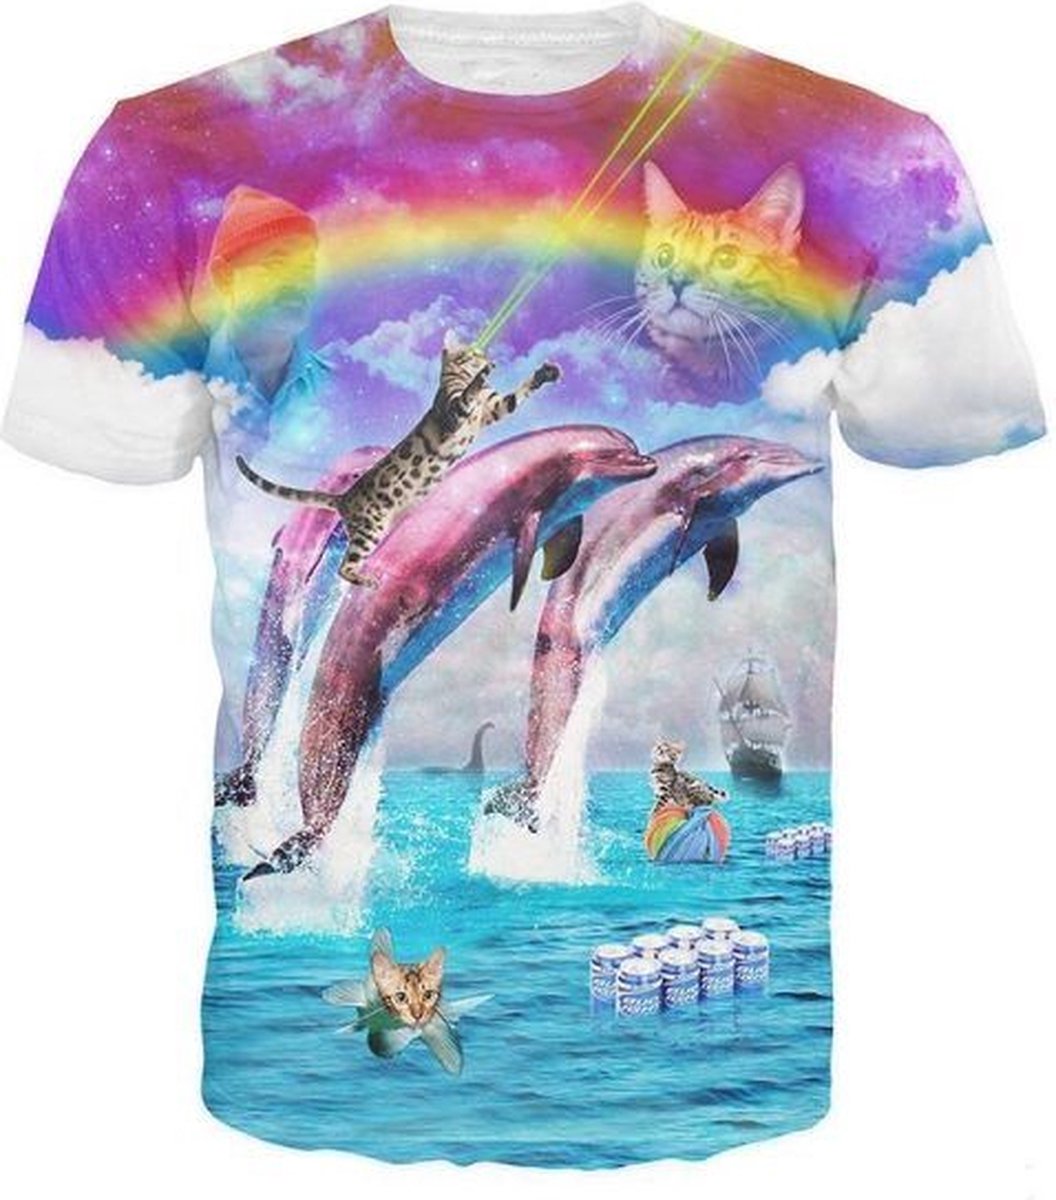 Dolfijn katenshirt Maat S Crew neck - Festival shirt - Superfout - Fout T-shirt - Feestkleding - Festival outfit - Foute kleding - Dolfijn - Dolfijn t-shirt - Dierenshirt